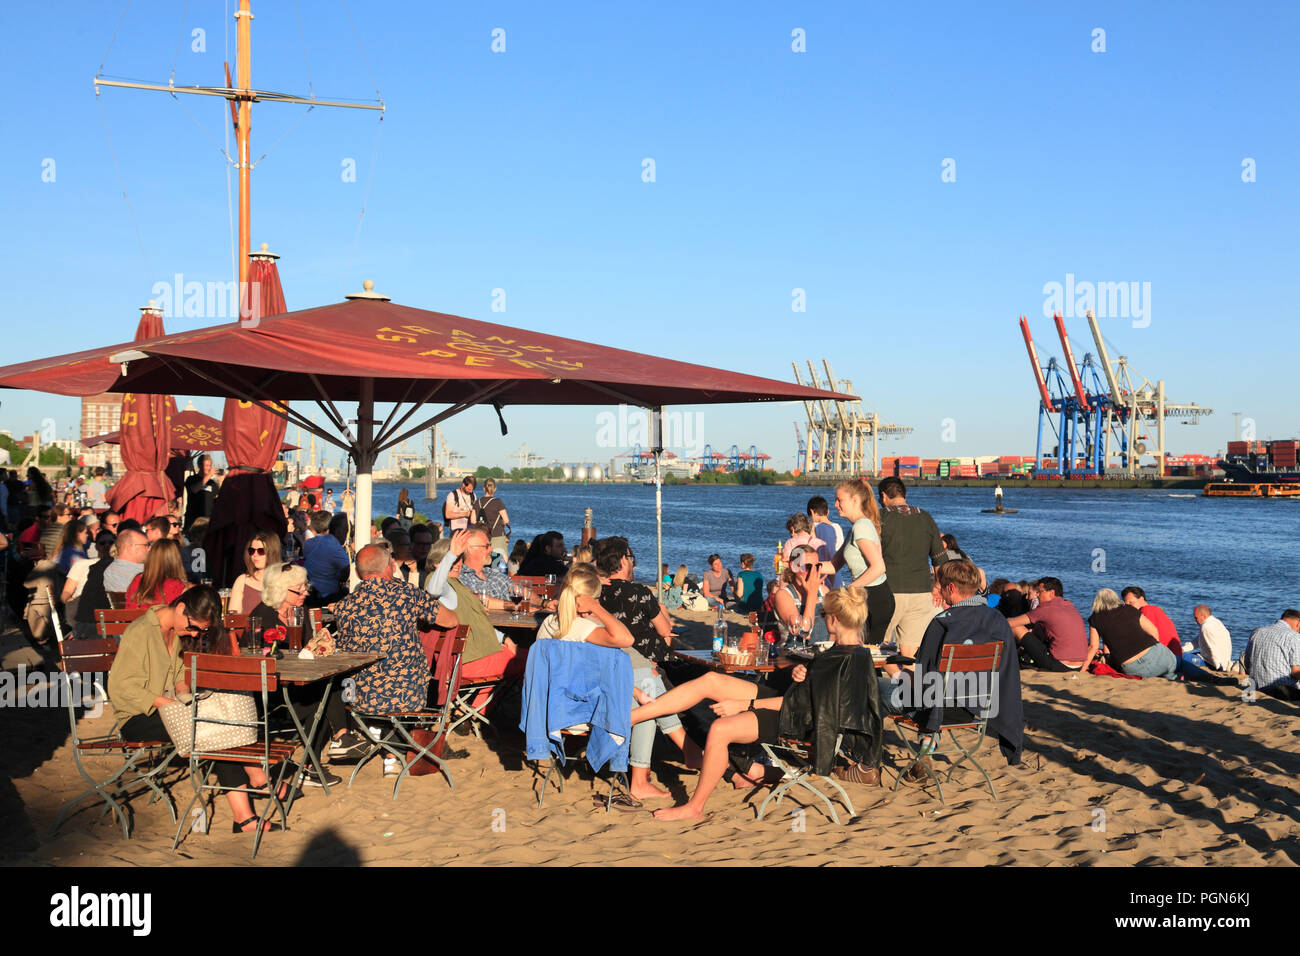 Bar STRANDPERLE on Elbe beach in the late afternoon, Oevelgoenne, Hamburg, Germany, Europe Stock Photo